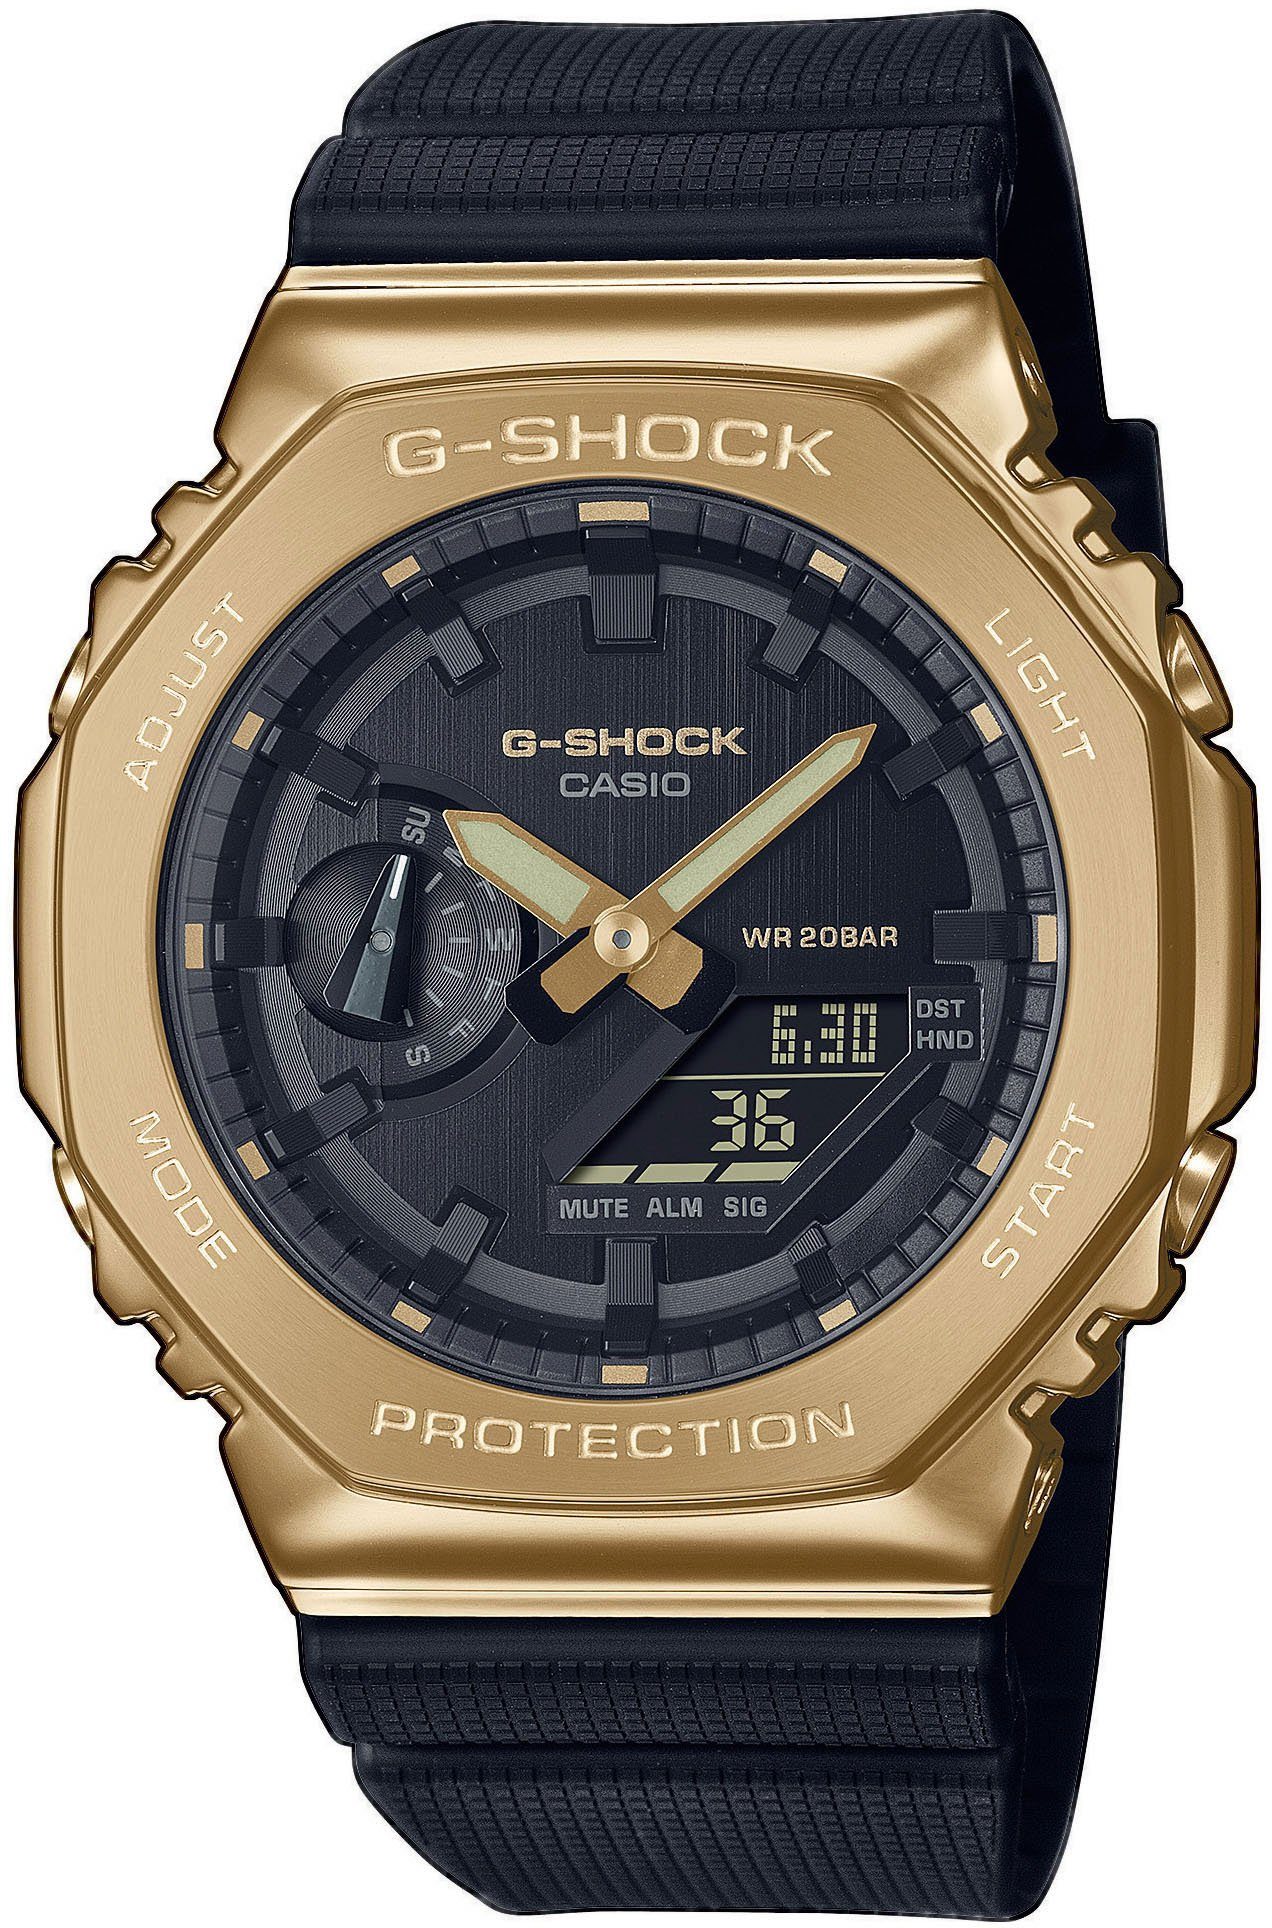 Chronograph GM-2100G-1A9ER CASIO G-SHOCK